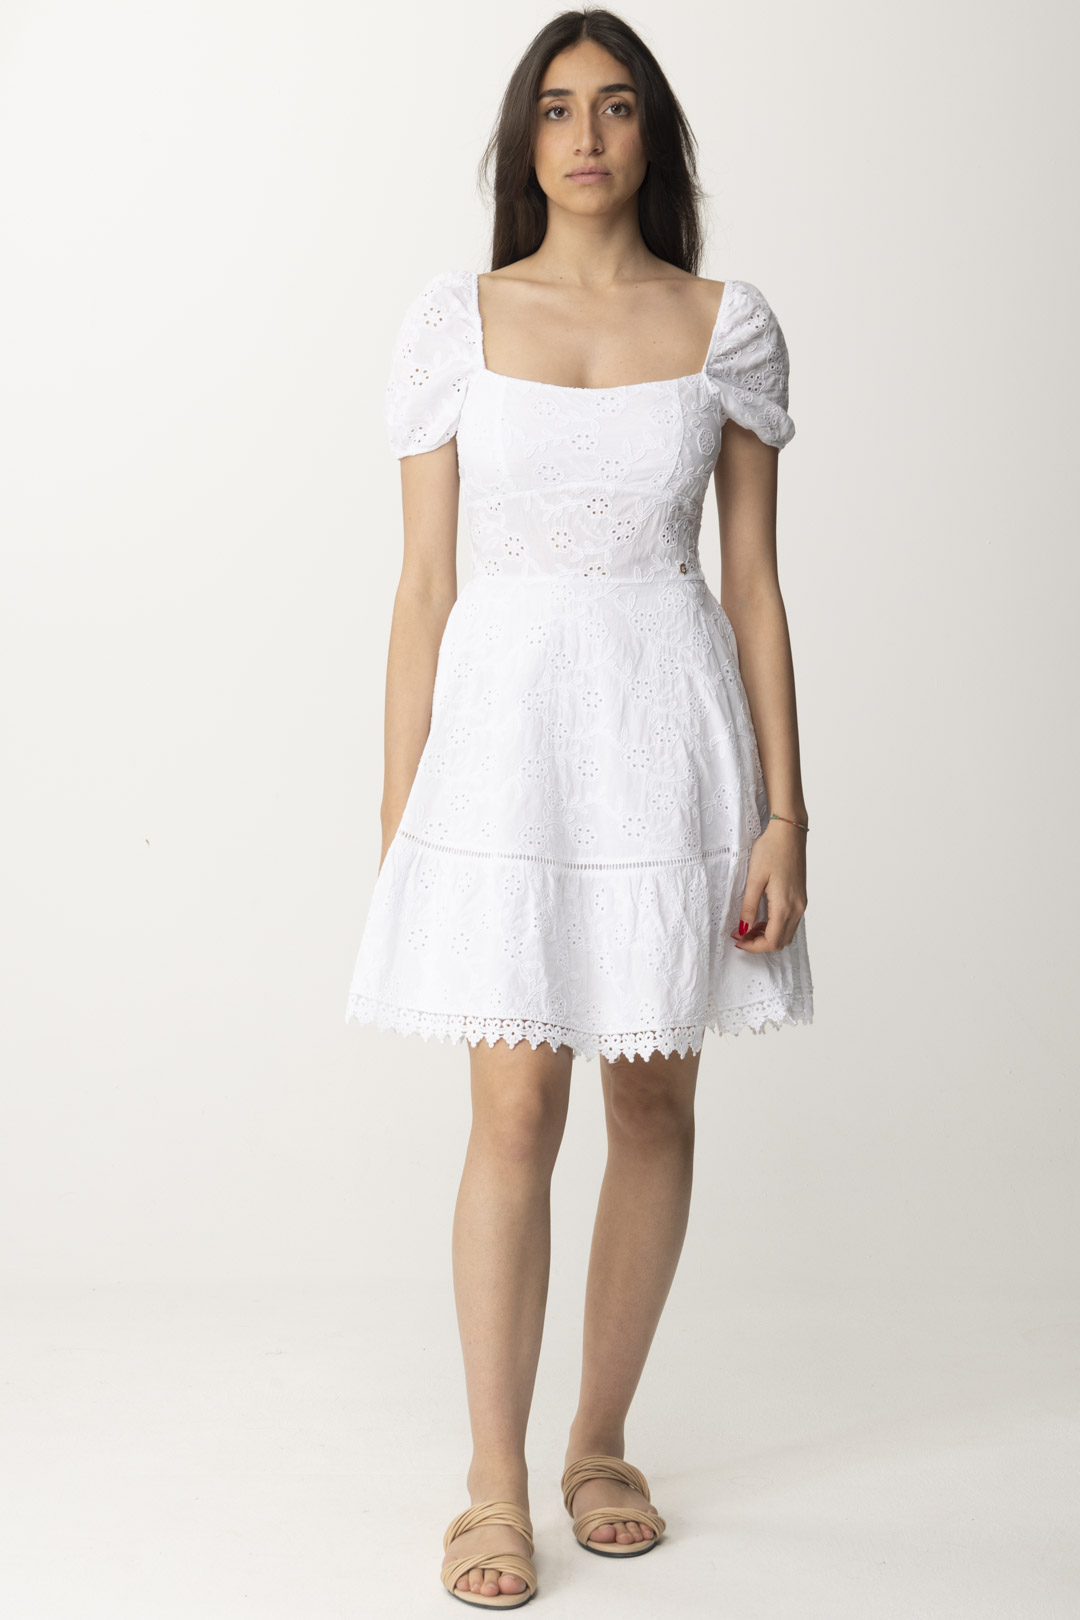 Podgląd: Guess Mini sukienka Sangallo Pure White